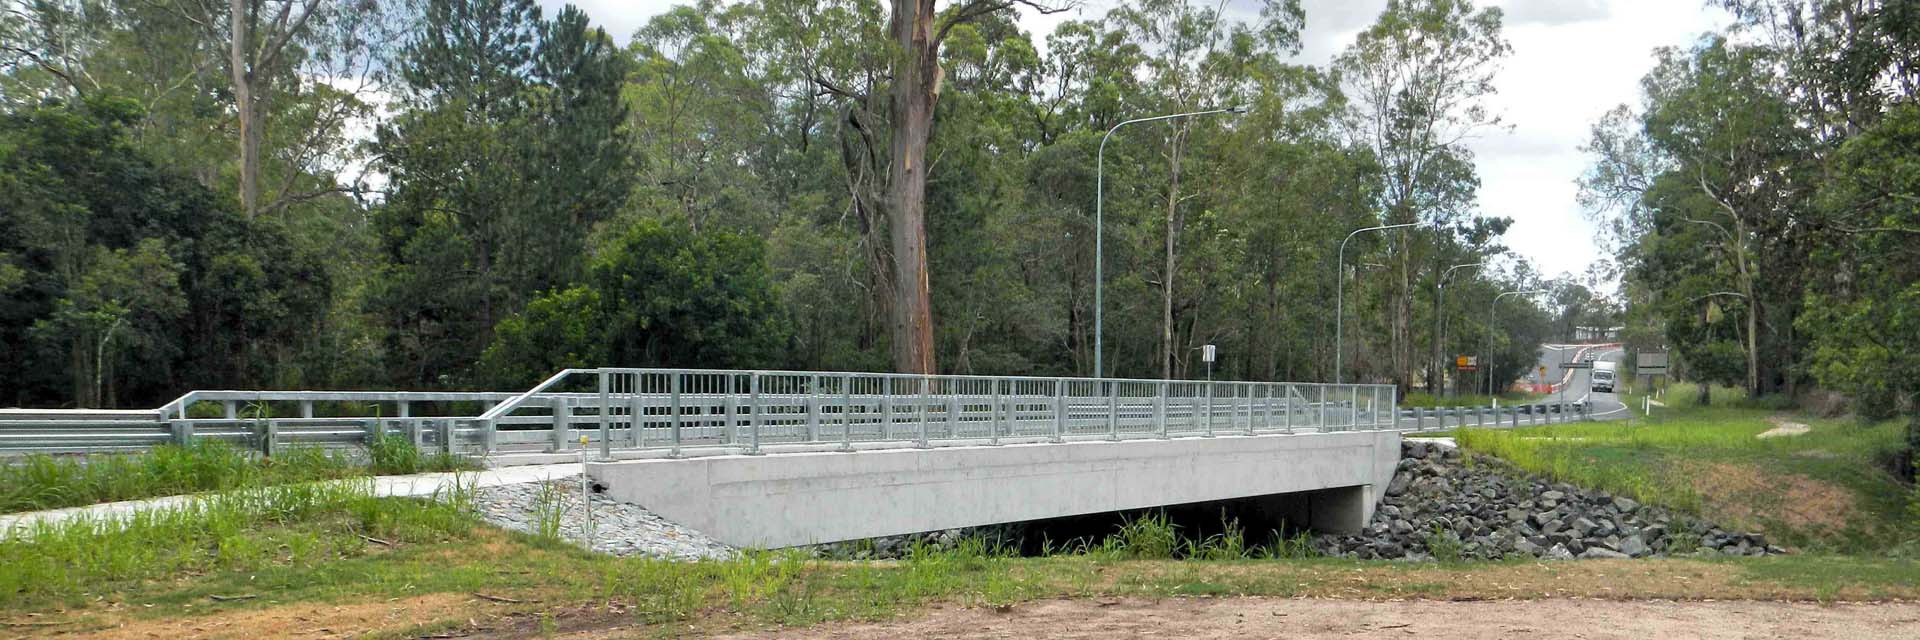 Steel Traffic barrier & Safety Barrier with pedestrian balustrade – Edwards Bridge, Greenbank